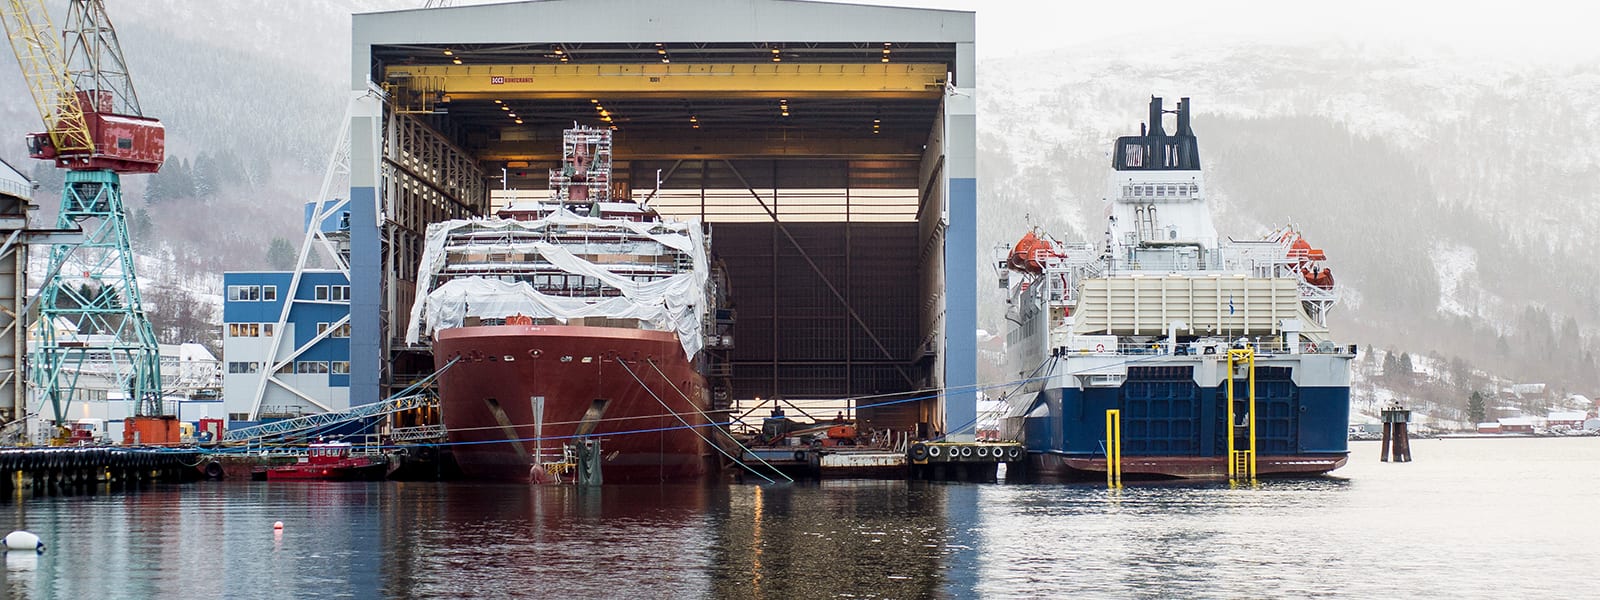 Bluefort provides floating accommodations at Norwegian Shipyard